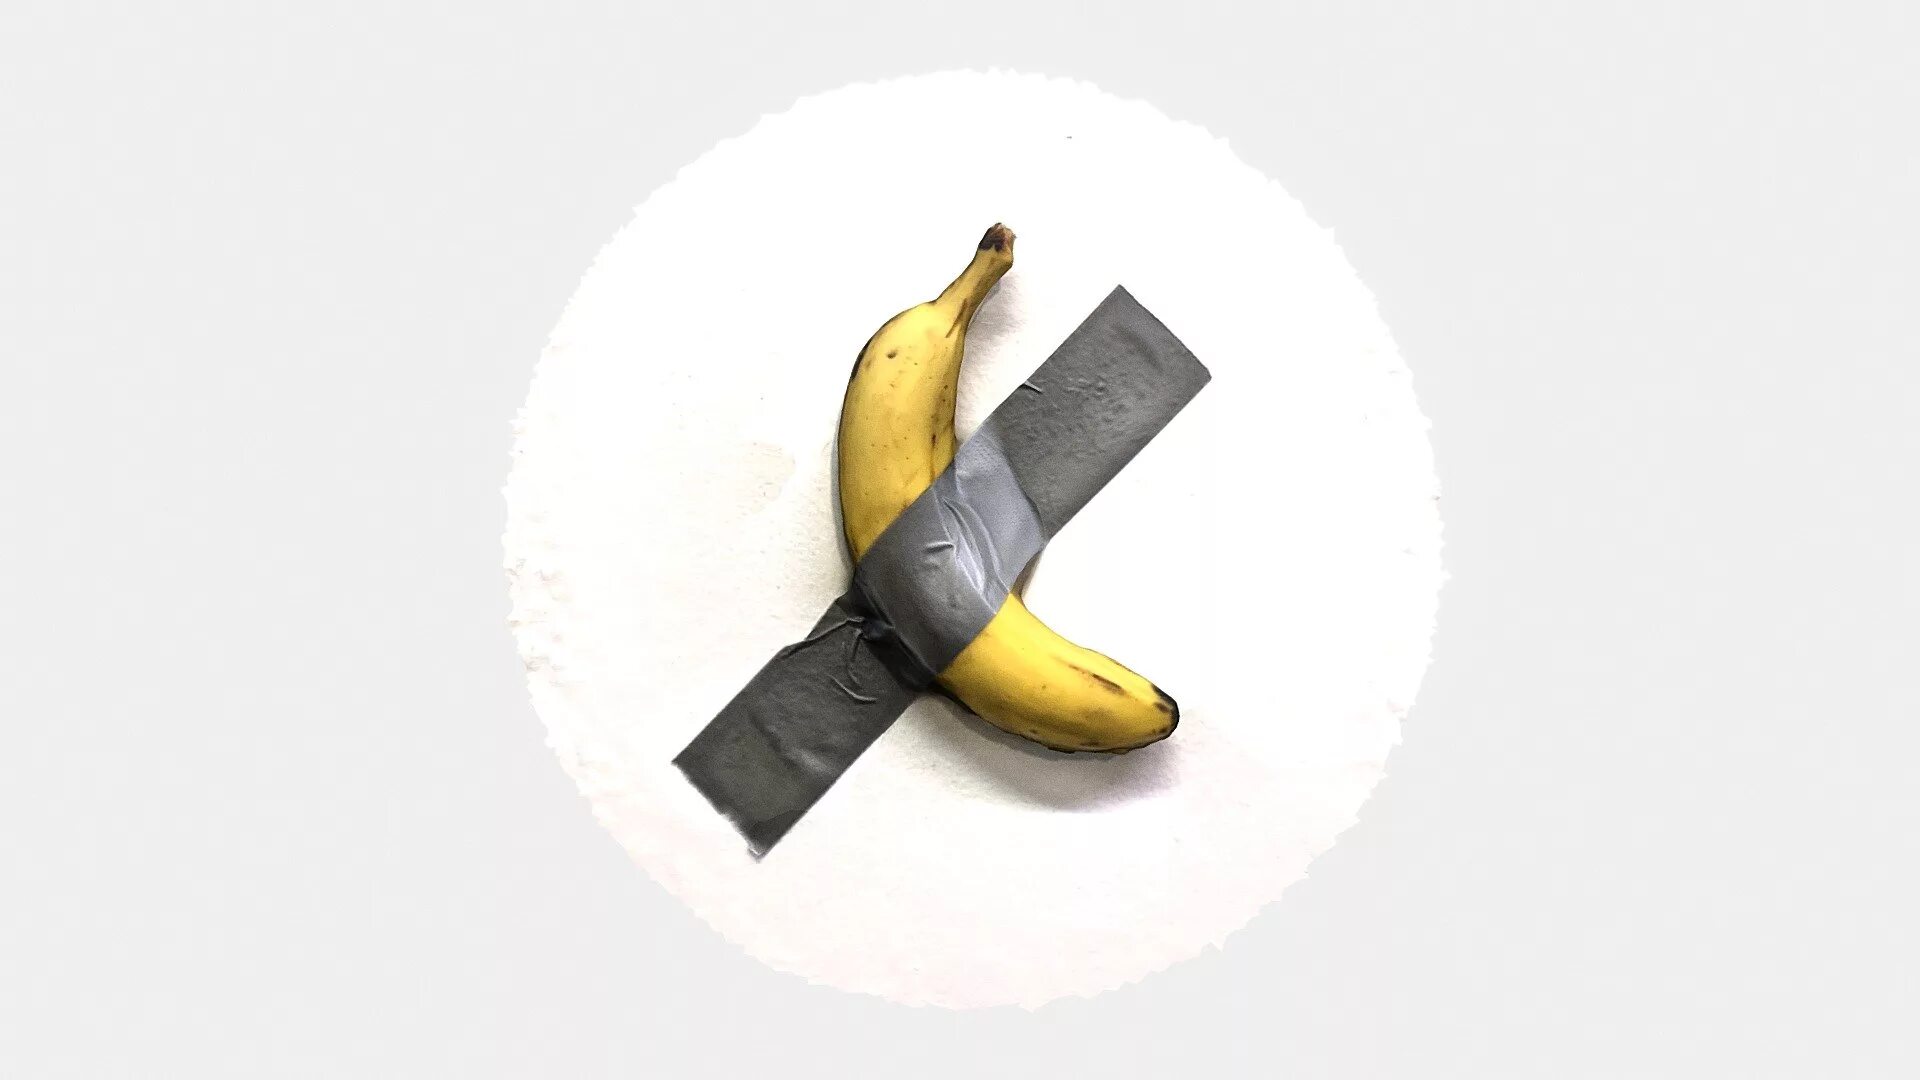 Https muz. Арт банан Минимализм. Банан рисунок. Банан Мем. Современное искусство банан.